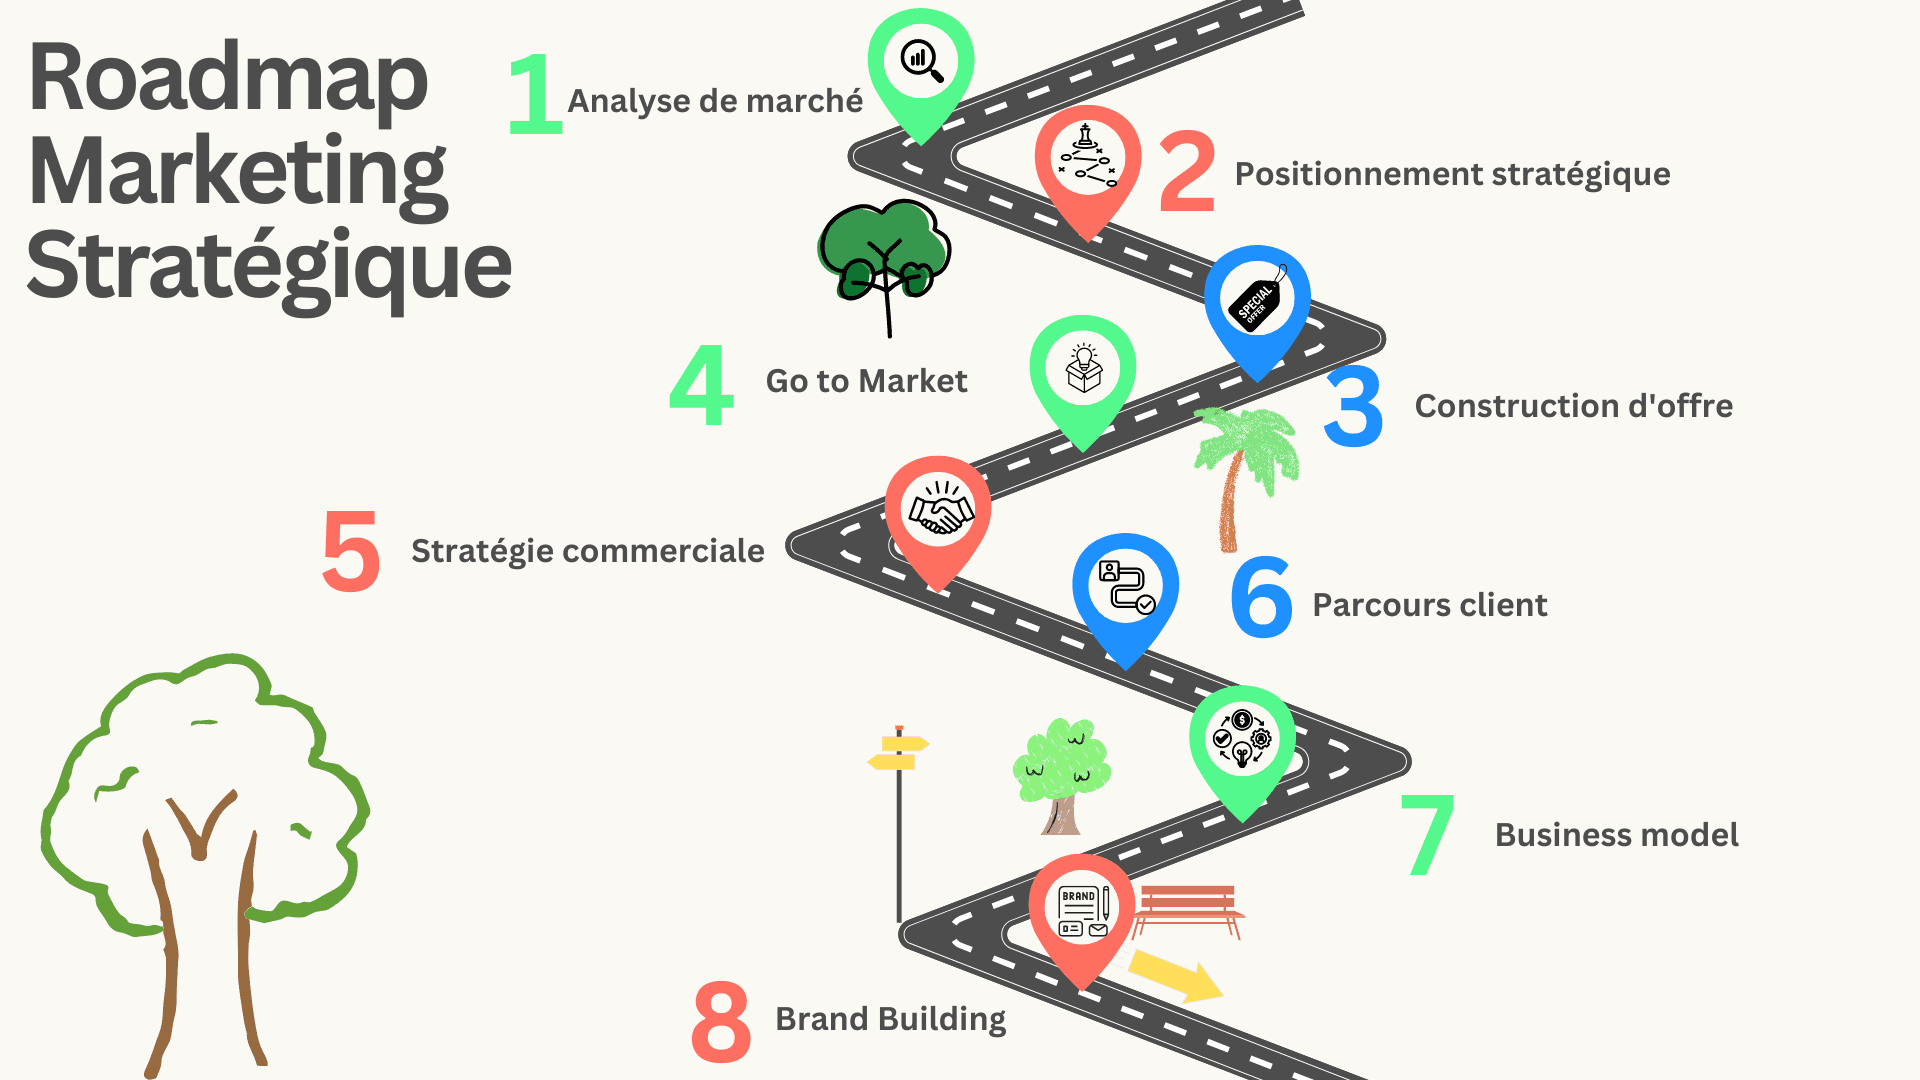 Roadmap Marketing Strategique 3